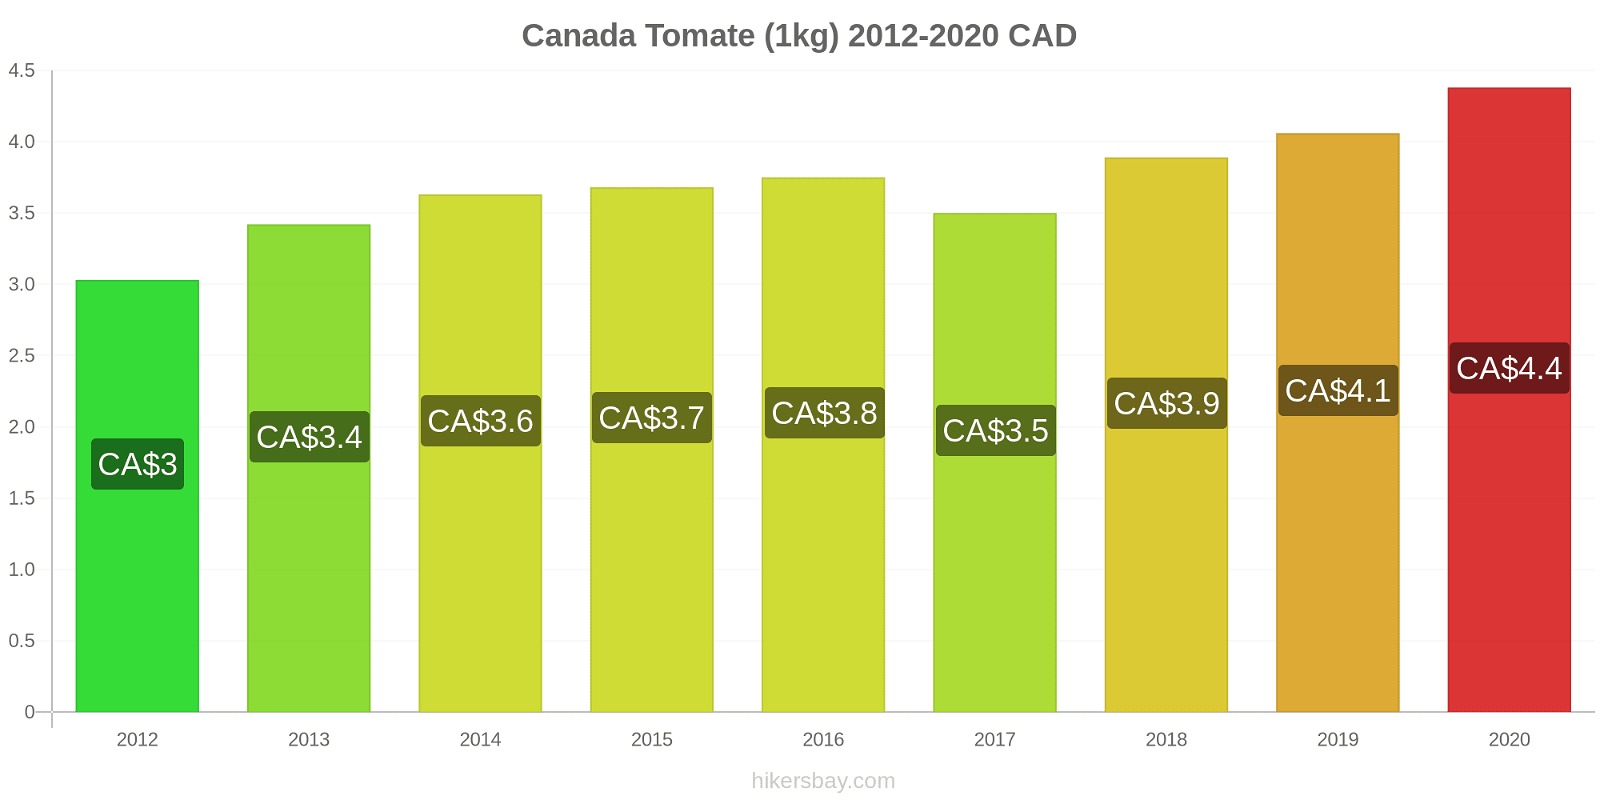 Canada changements de prix Tomate (1kg) hikersbay.com